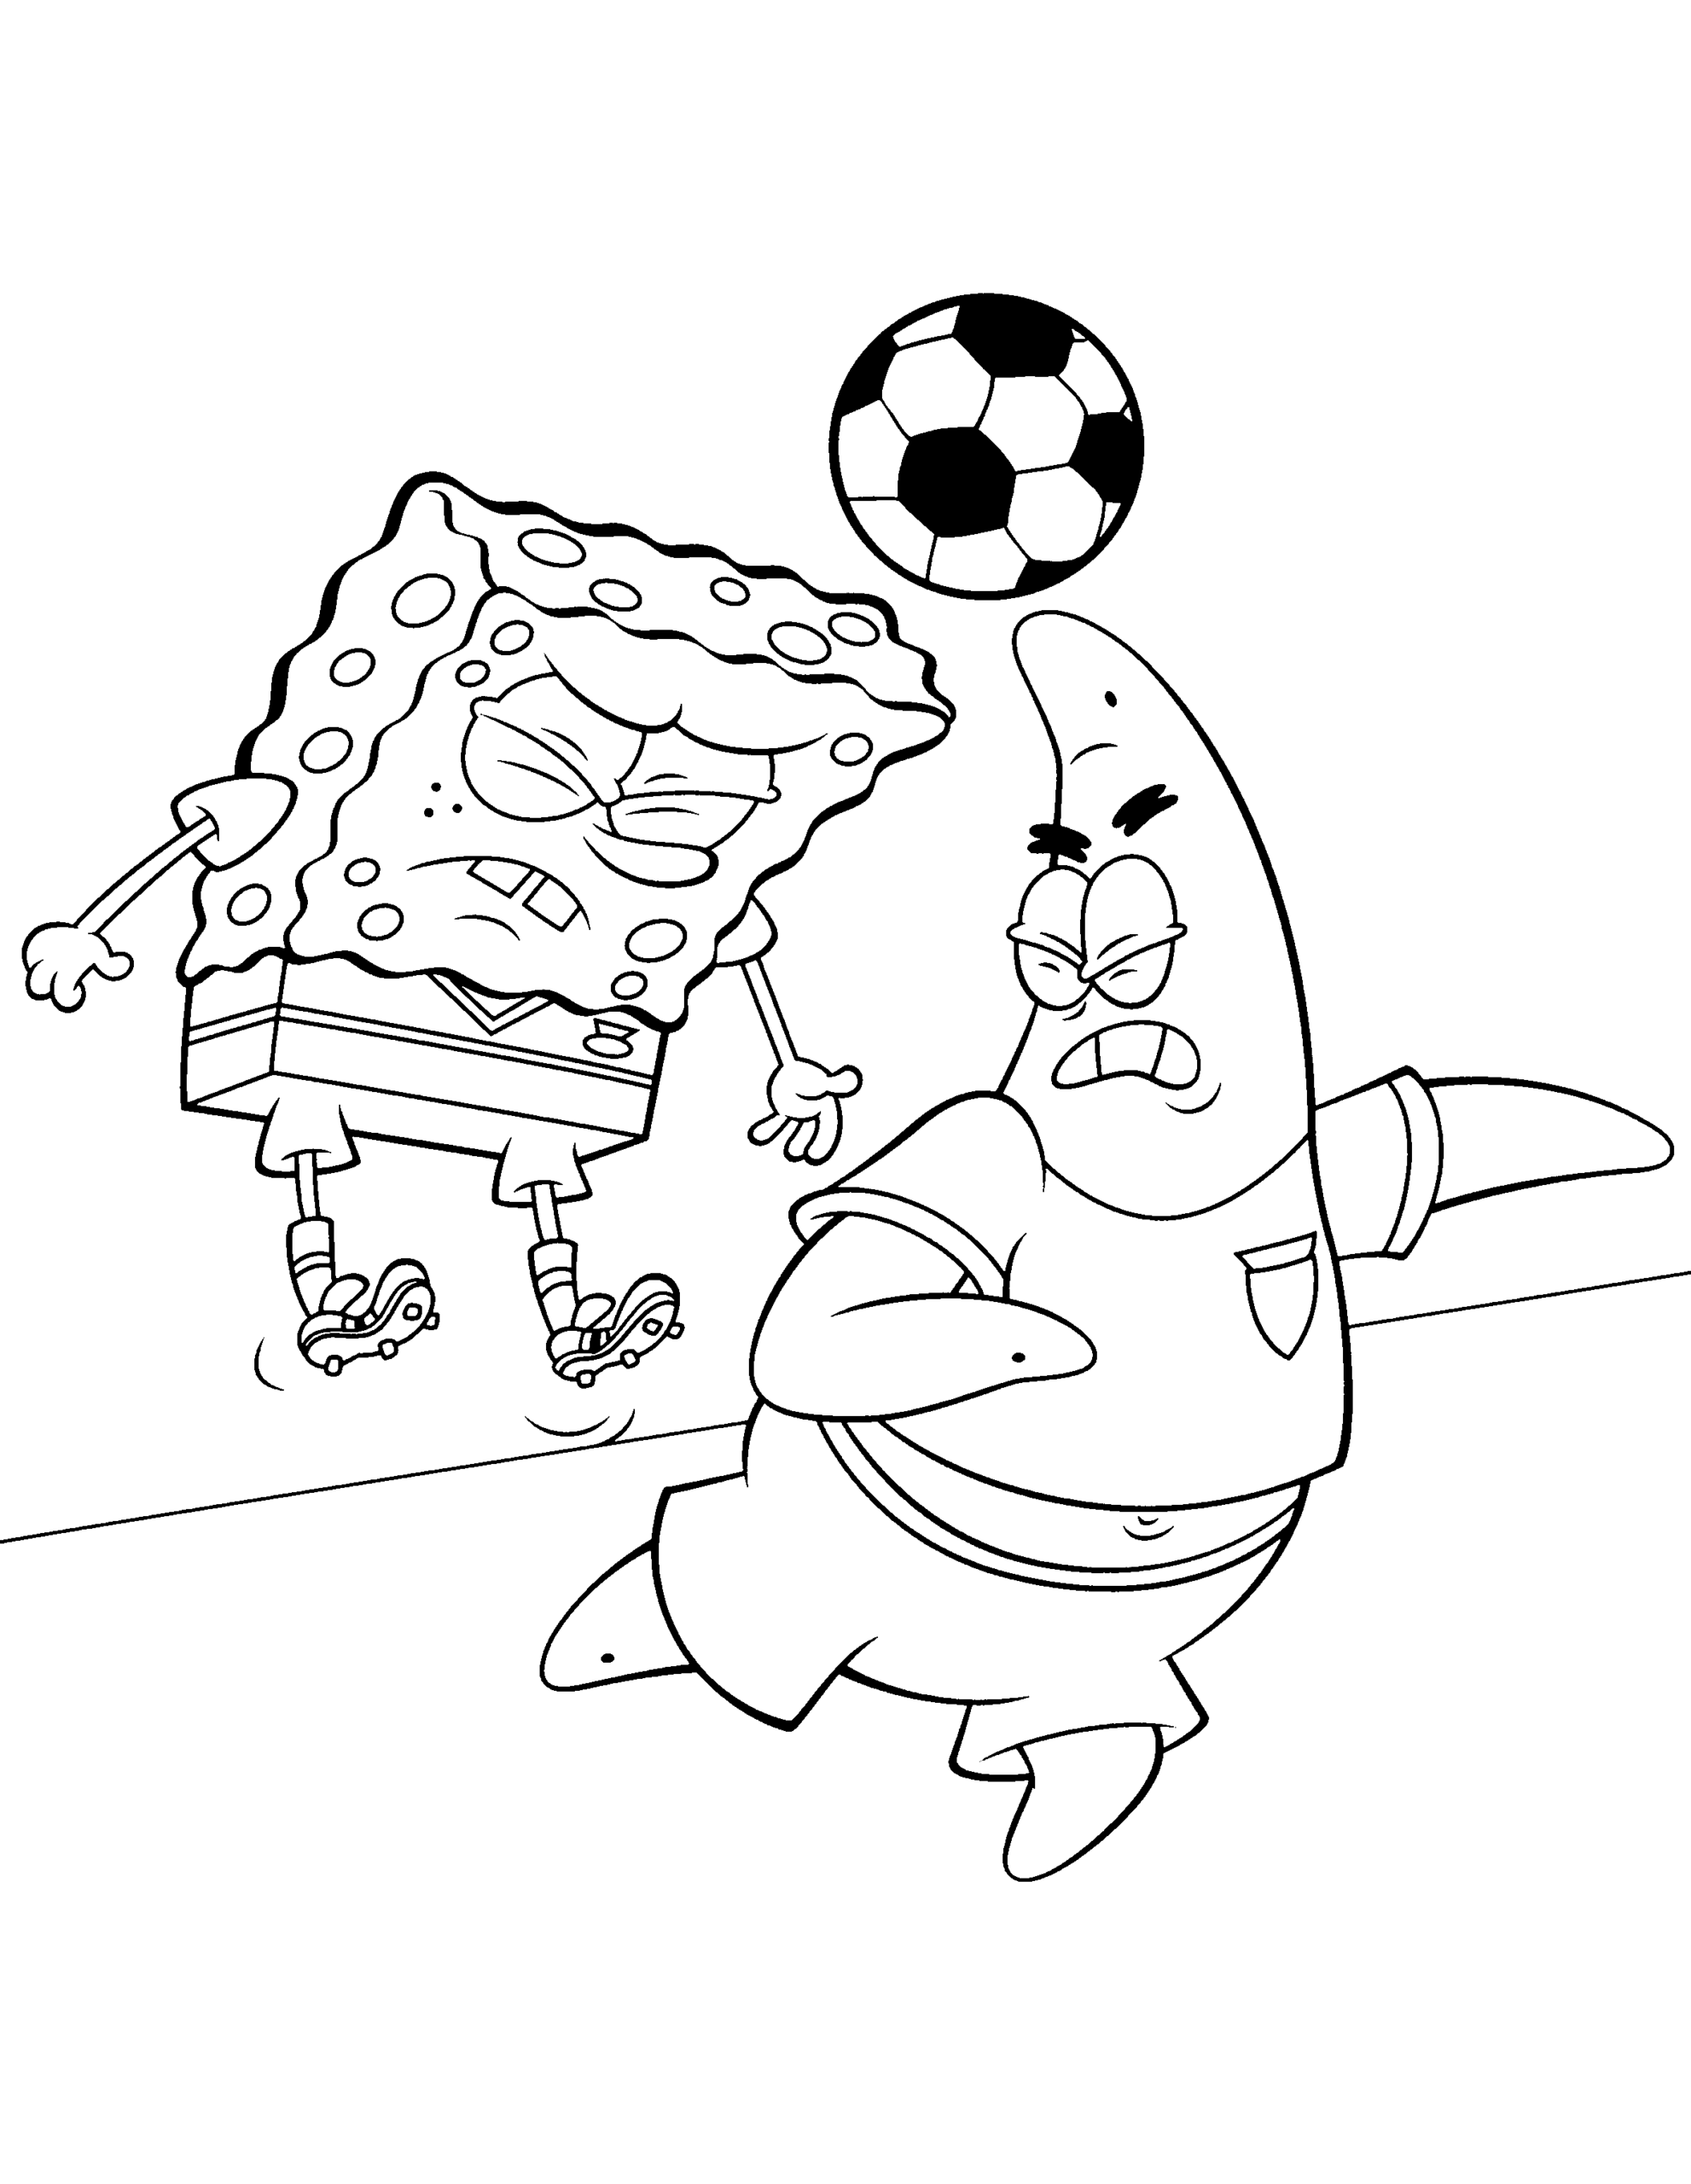 SpongeBob SquarePants Coloring Pages Cartoons spongebob squarepants 3 Printable 2020 6054 Coloring4free